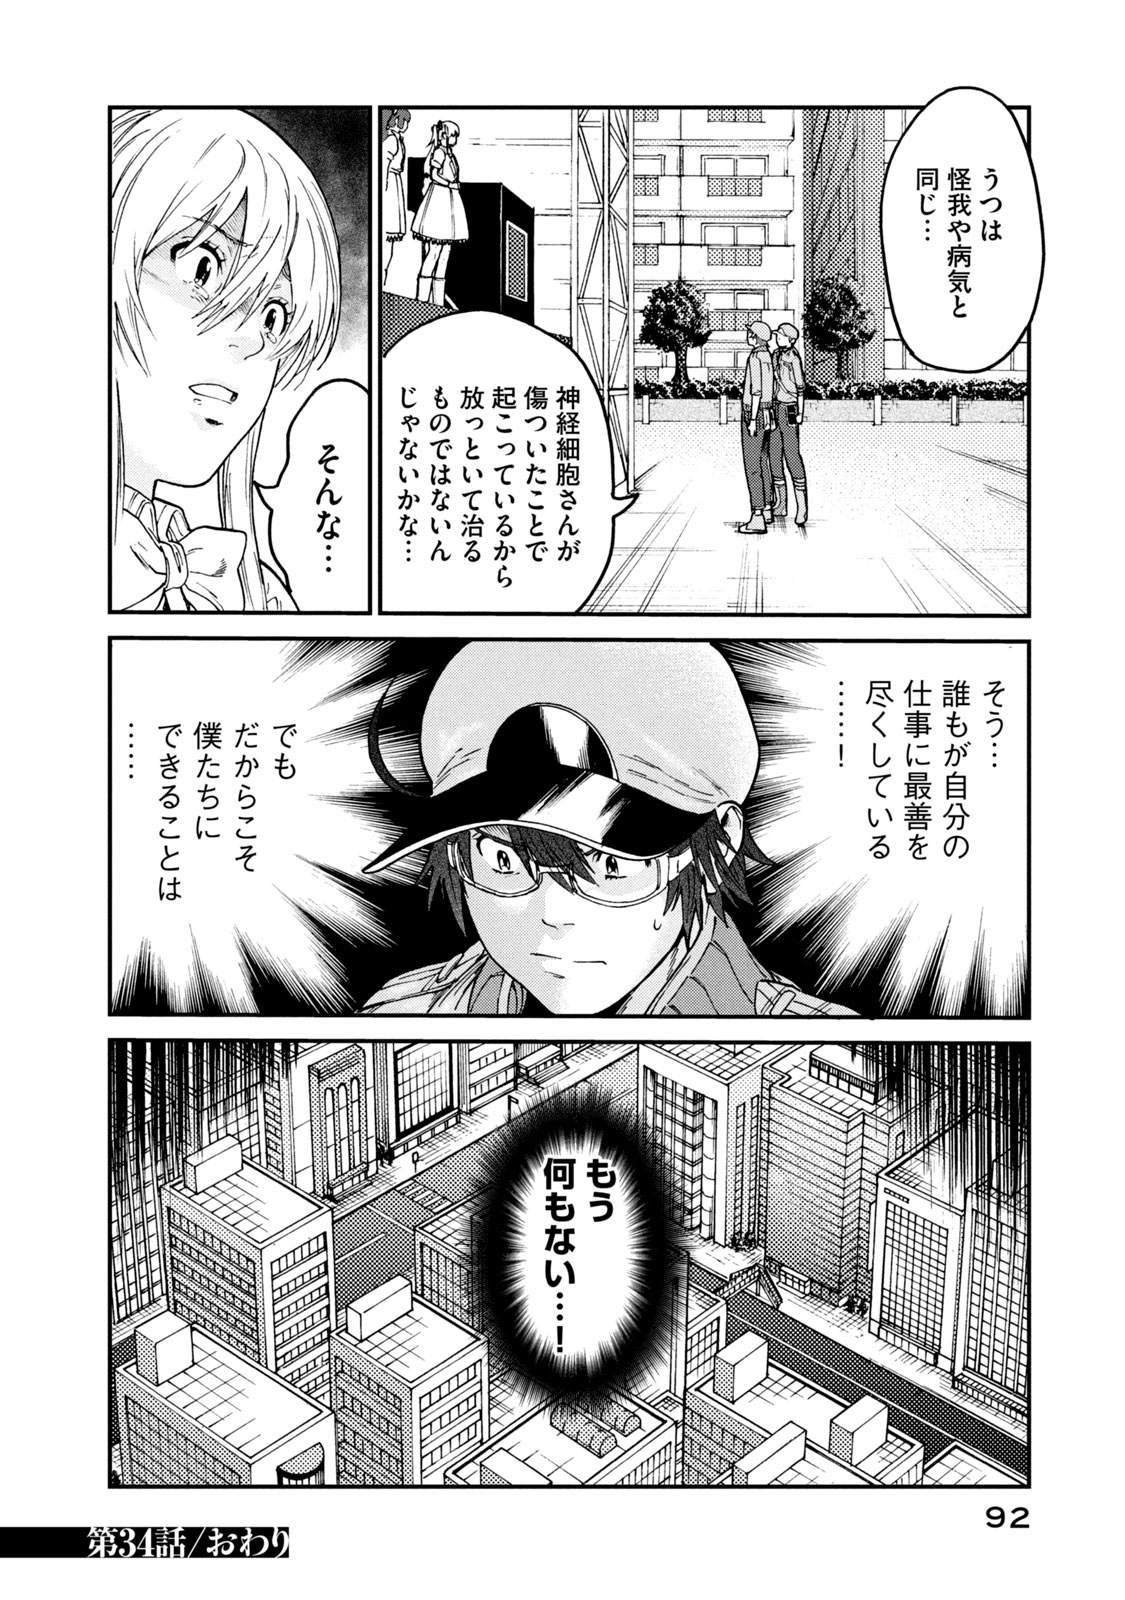 Hataraku Saibou BLACK - Chapter 34 - Page 30